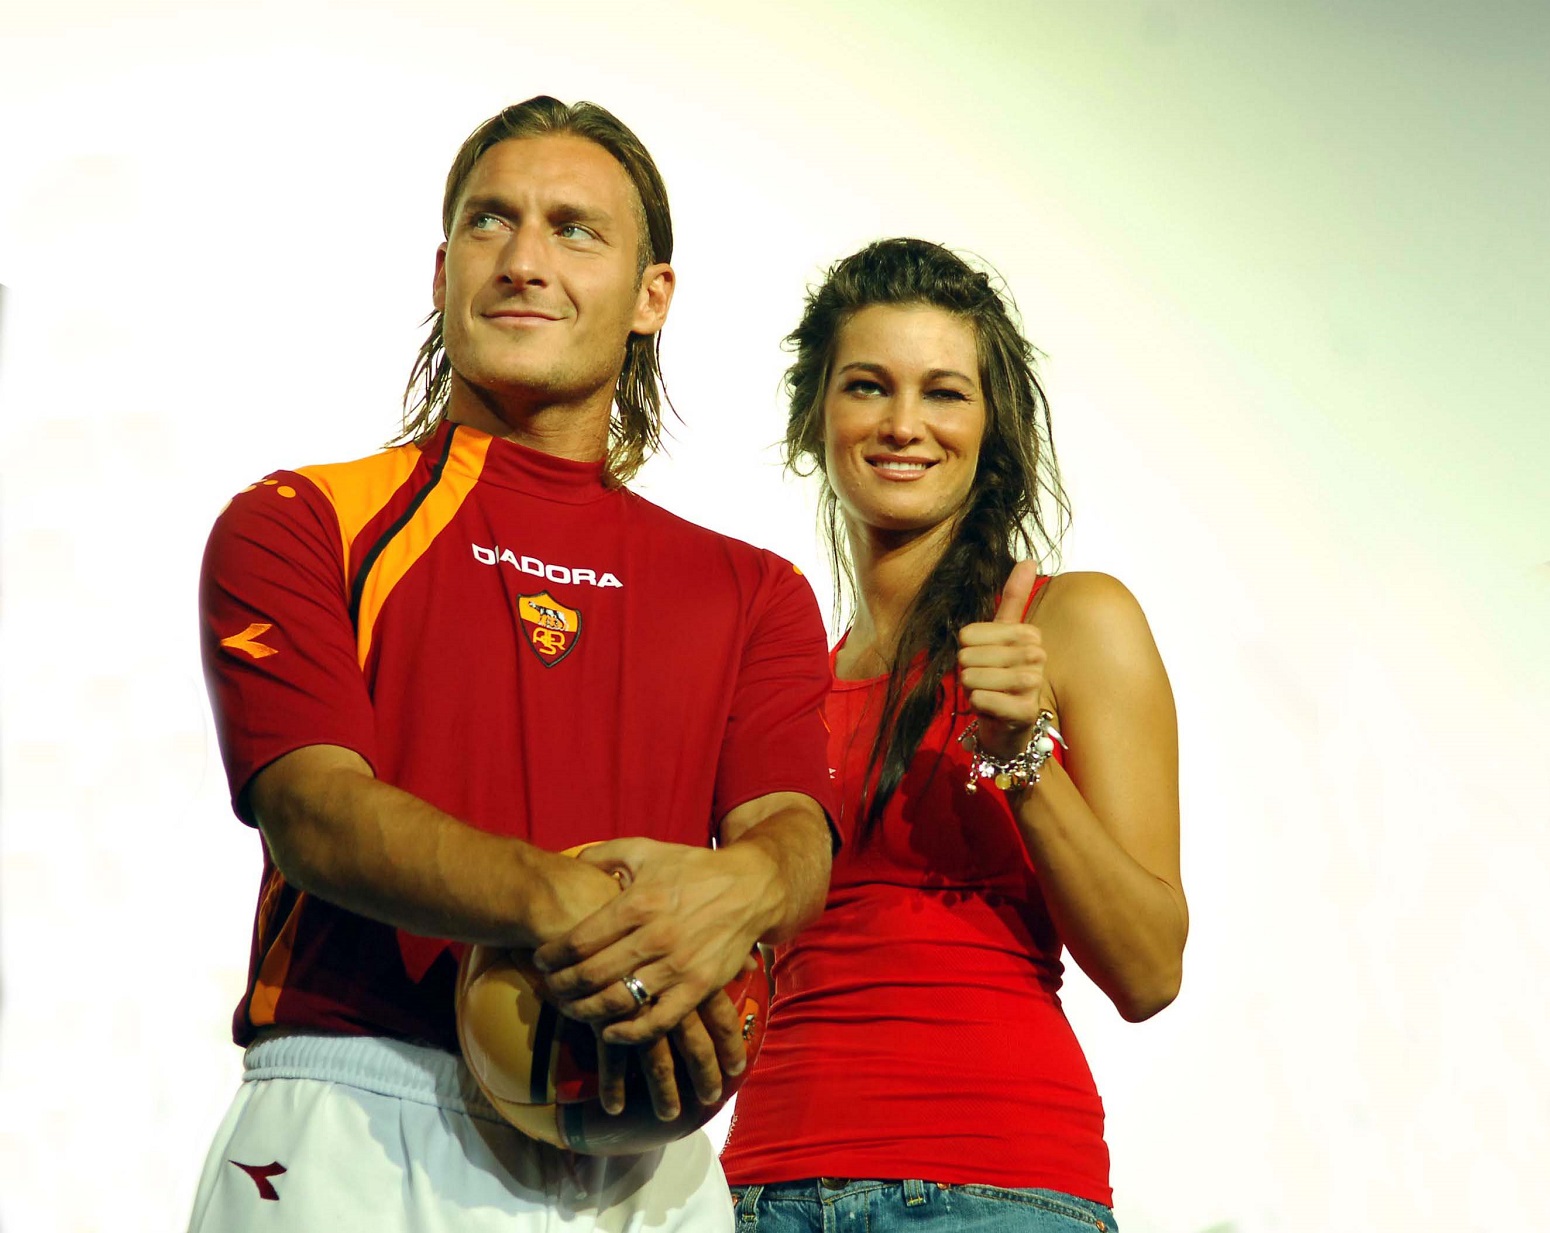 Francesco Totti e Manuela Arcuri